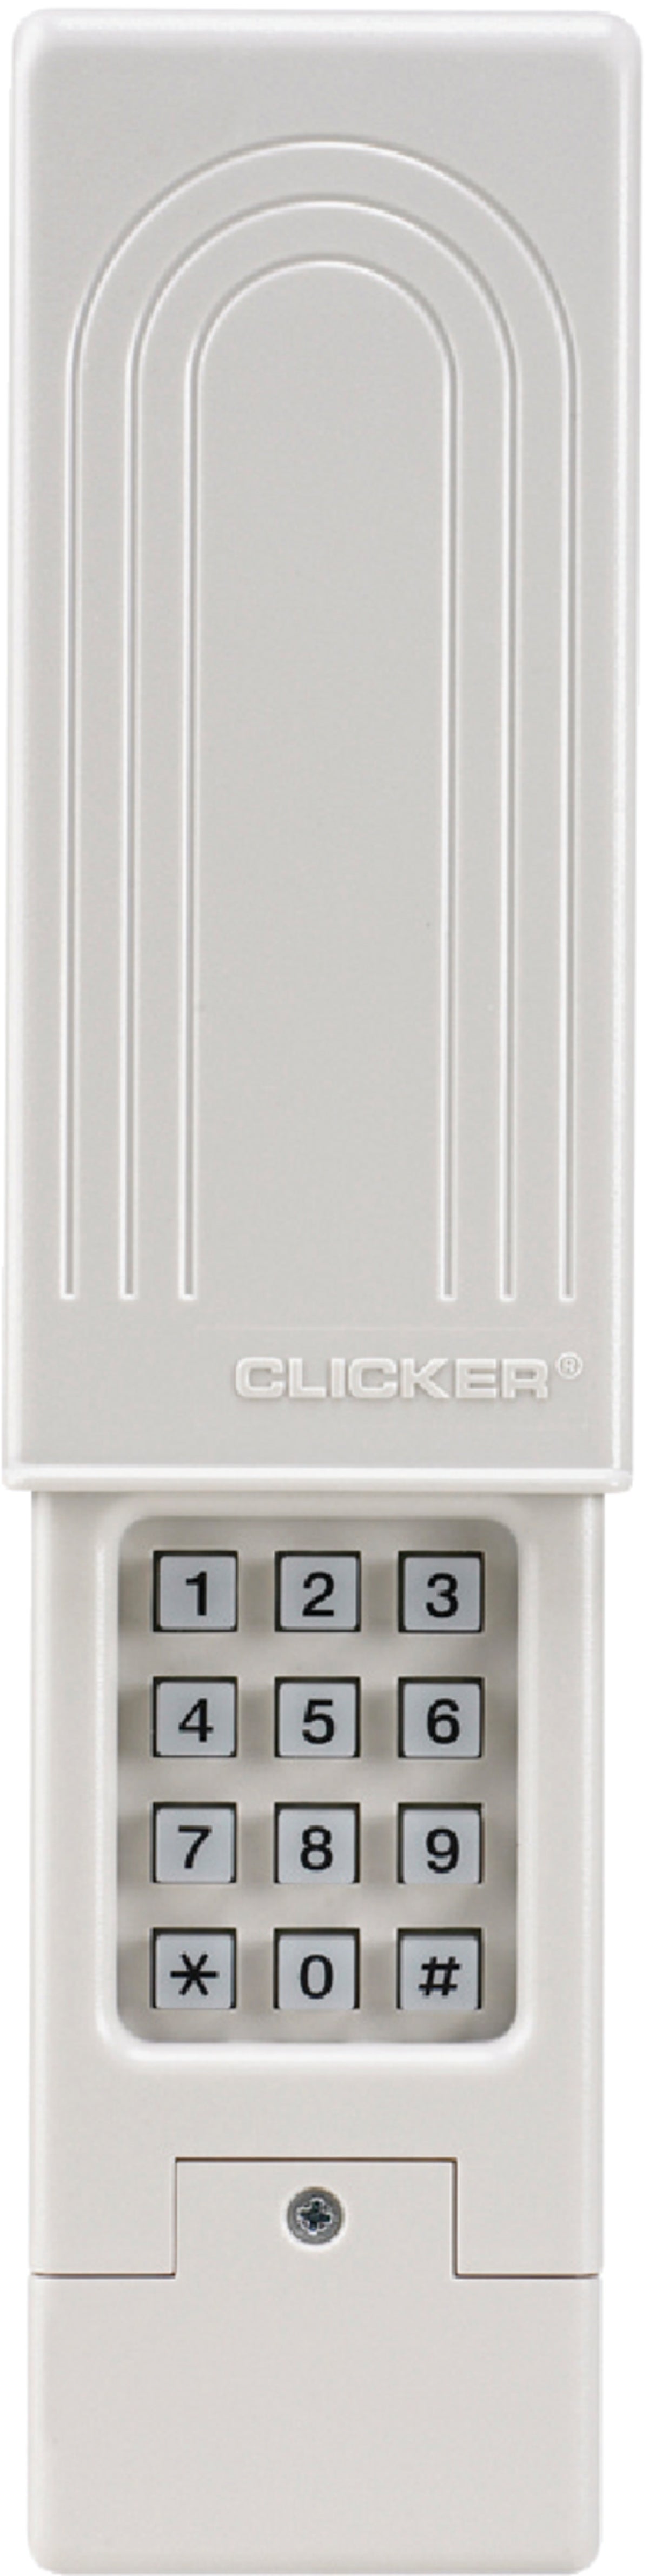 chamberlain clicker keypad programming